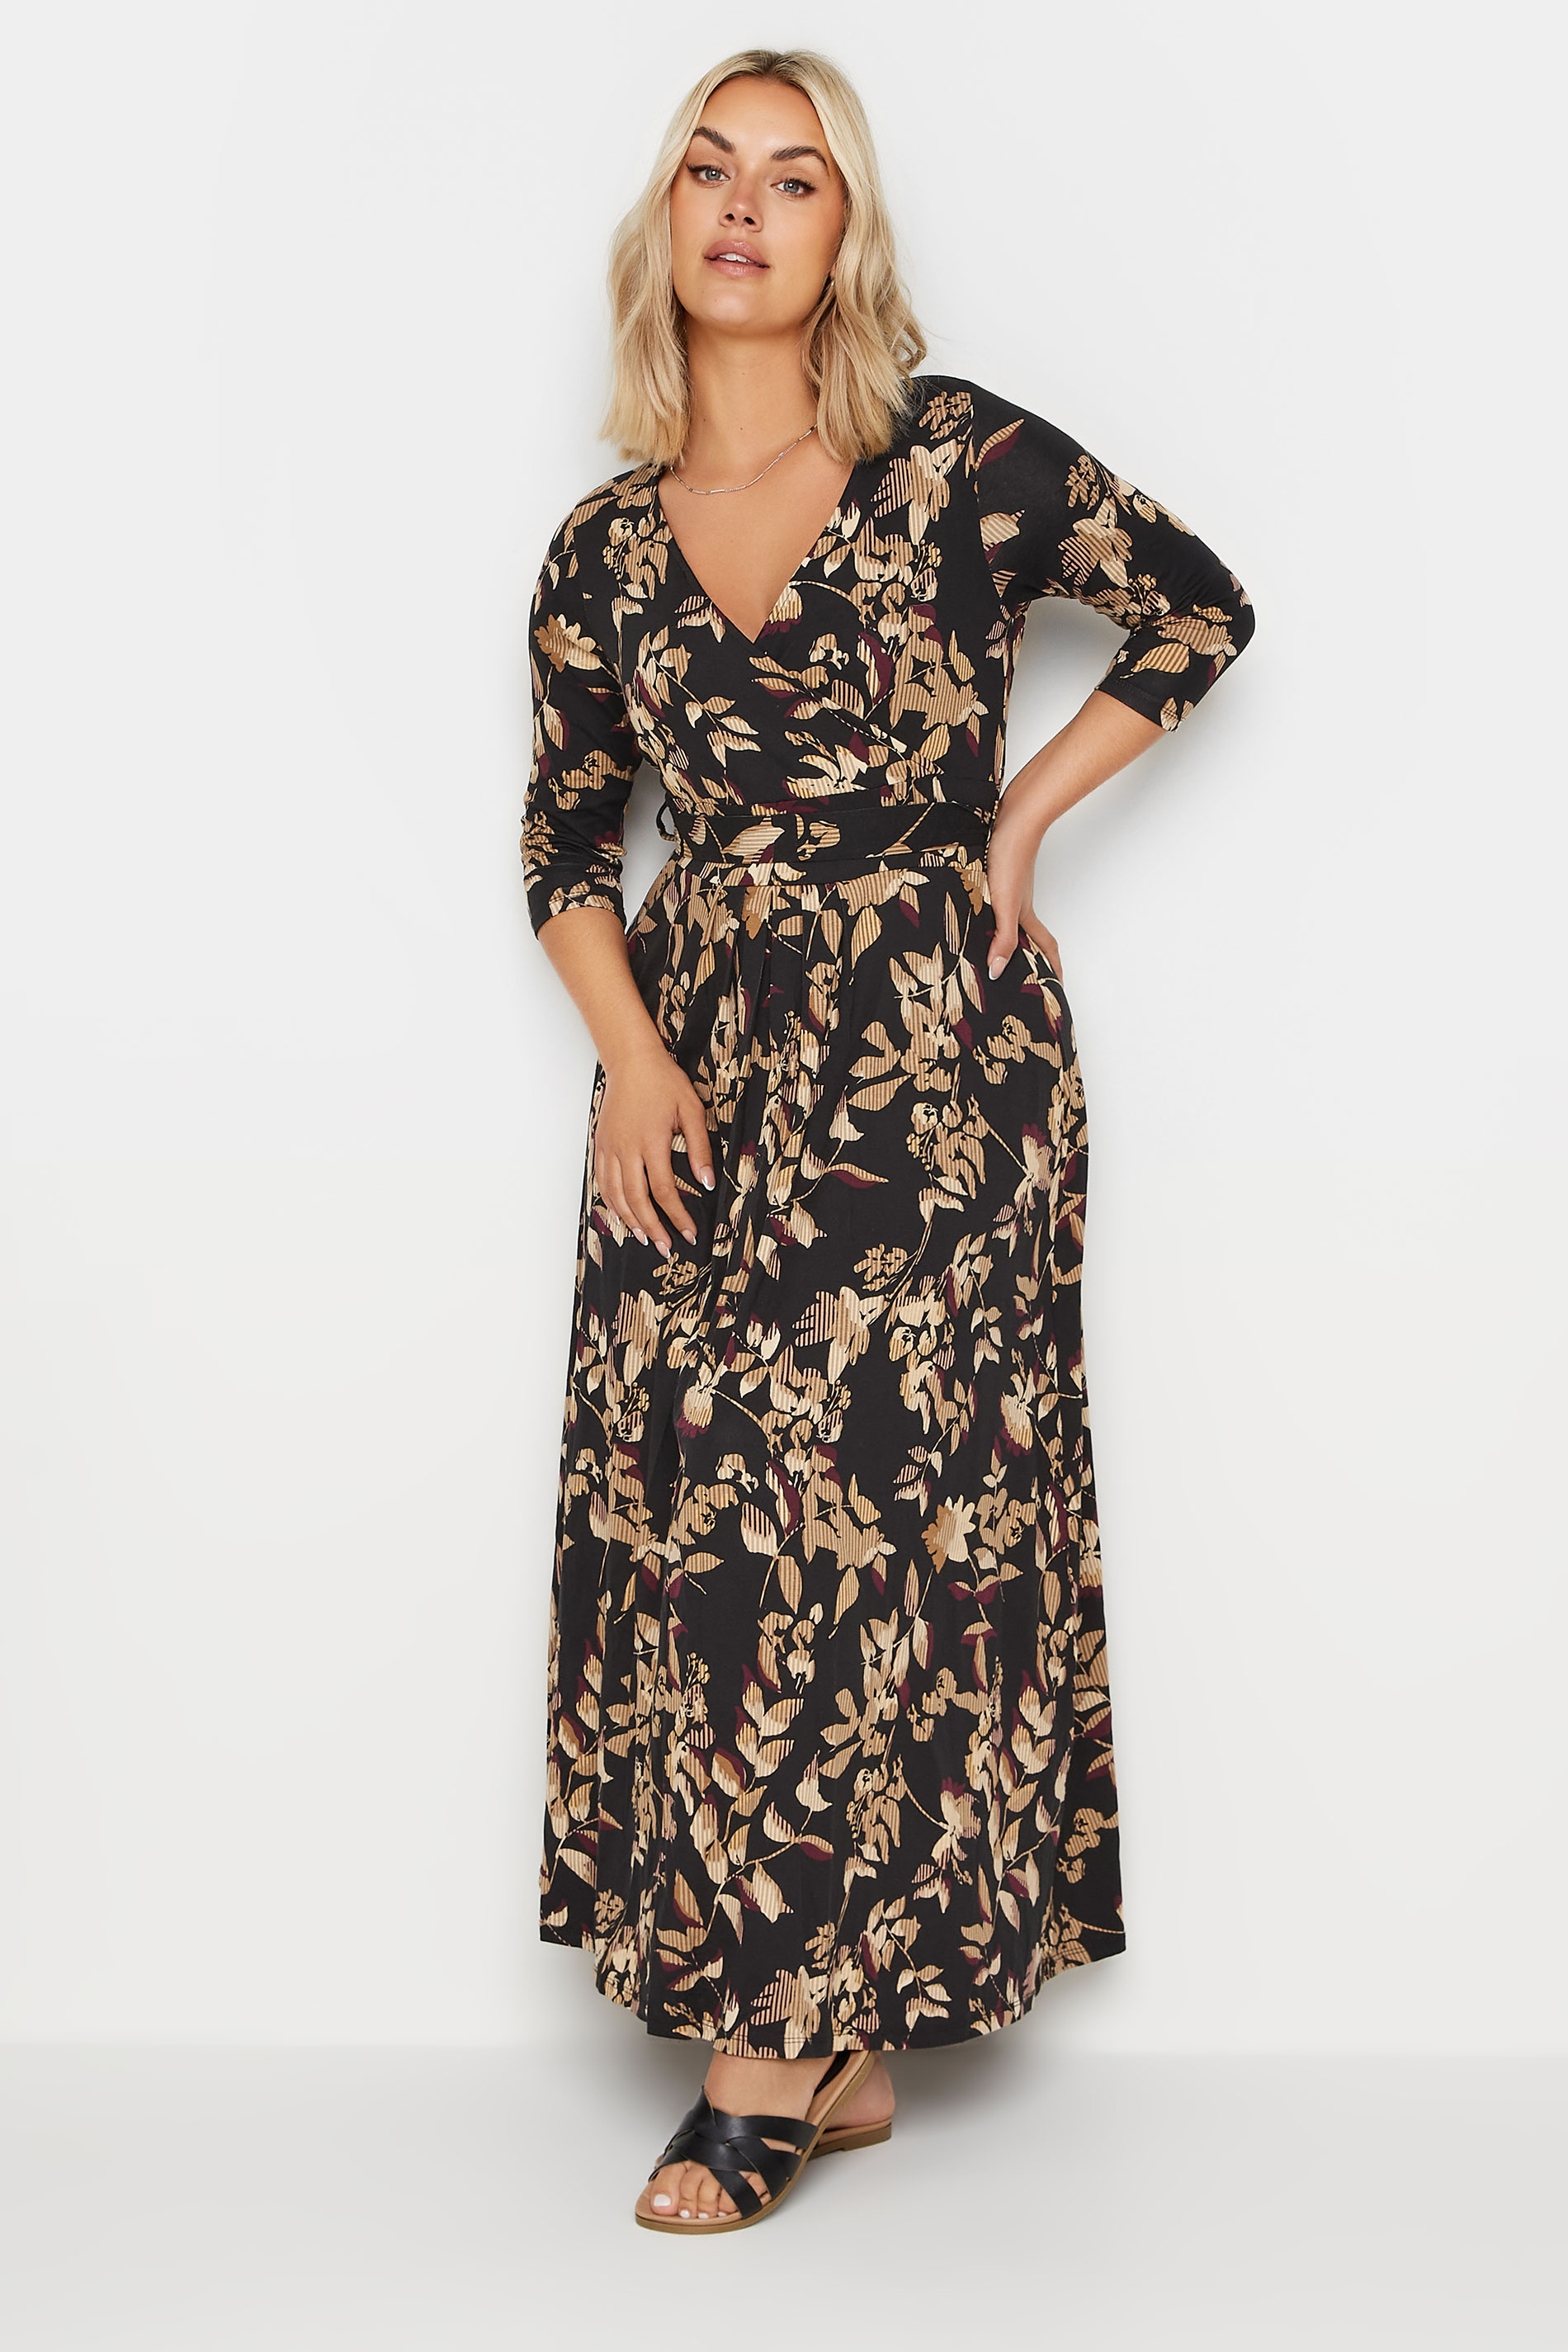 YOURS Plus Size Black Leaf Print Maxi Wrap Dress | Yours Clothing 2